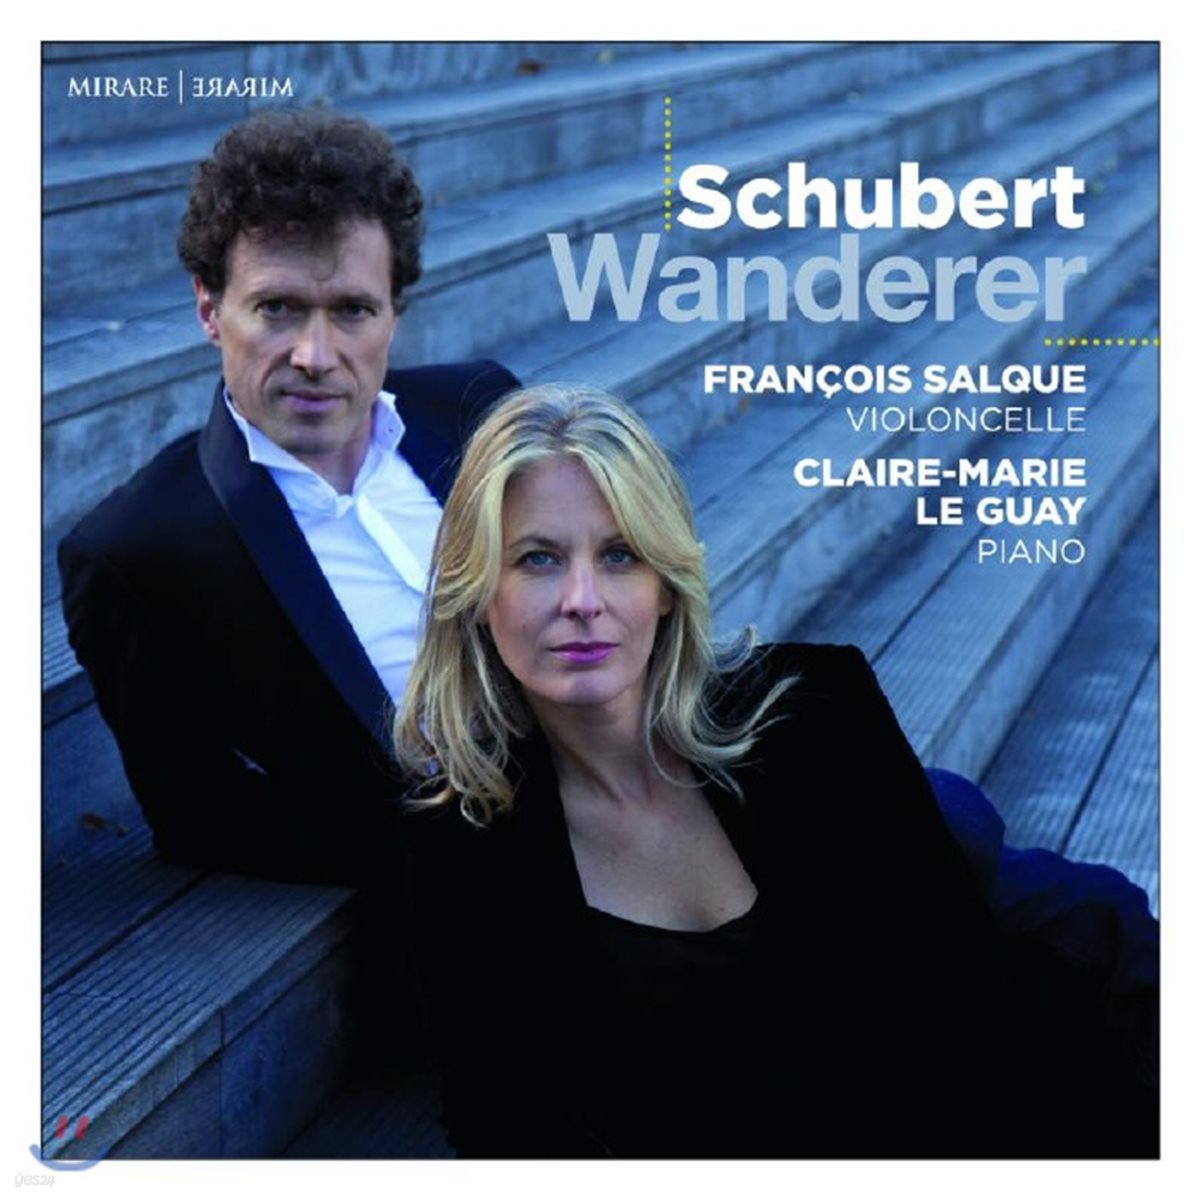 Francois Salque / Claire-Marie Le Guay 슈베르트: 방랑자 환상곡 / 아르페지오네 소나타 (Schubert: Der Wanderer, D489 / Sonata in A minor 'Arpeggione', D821)